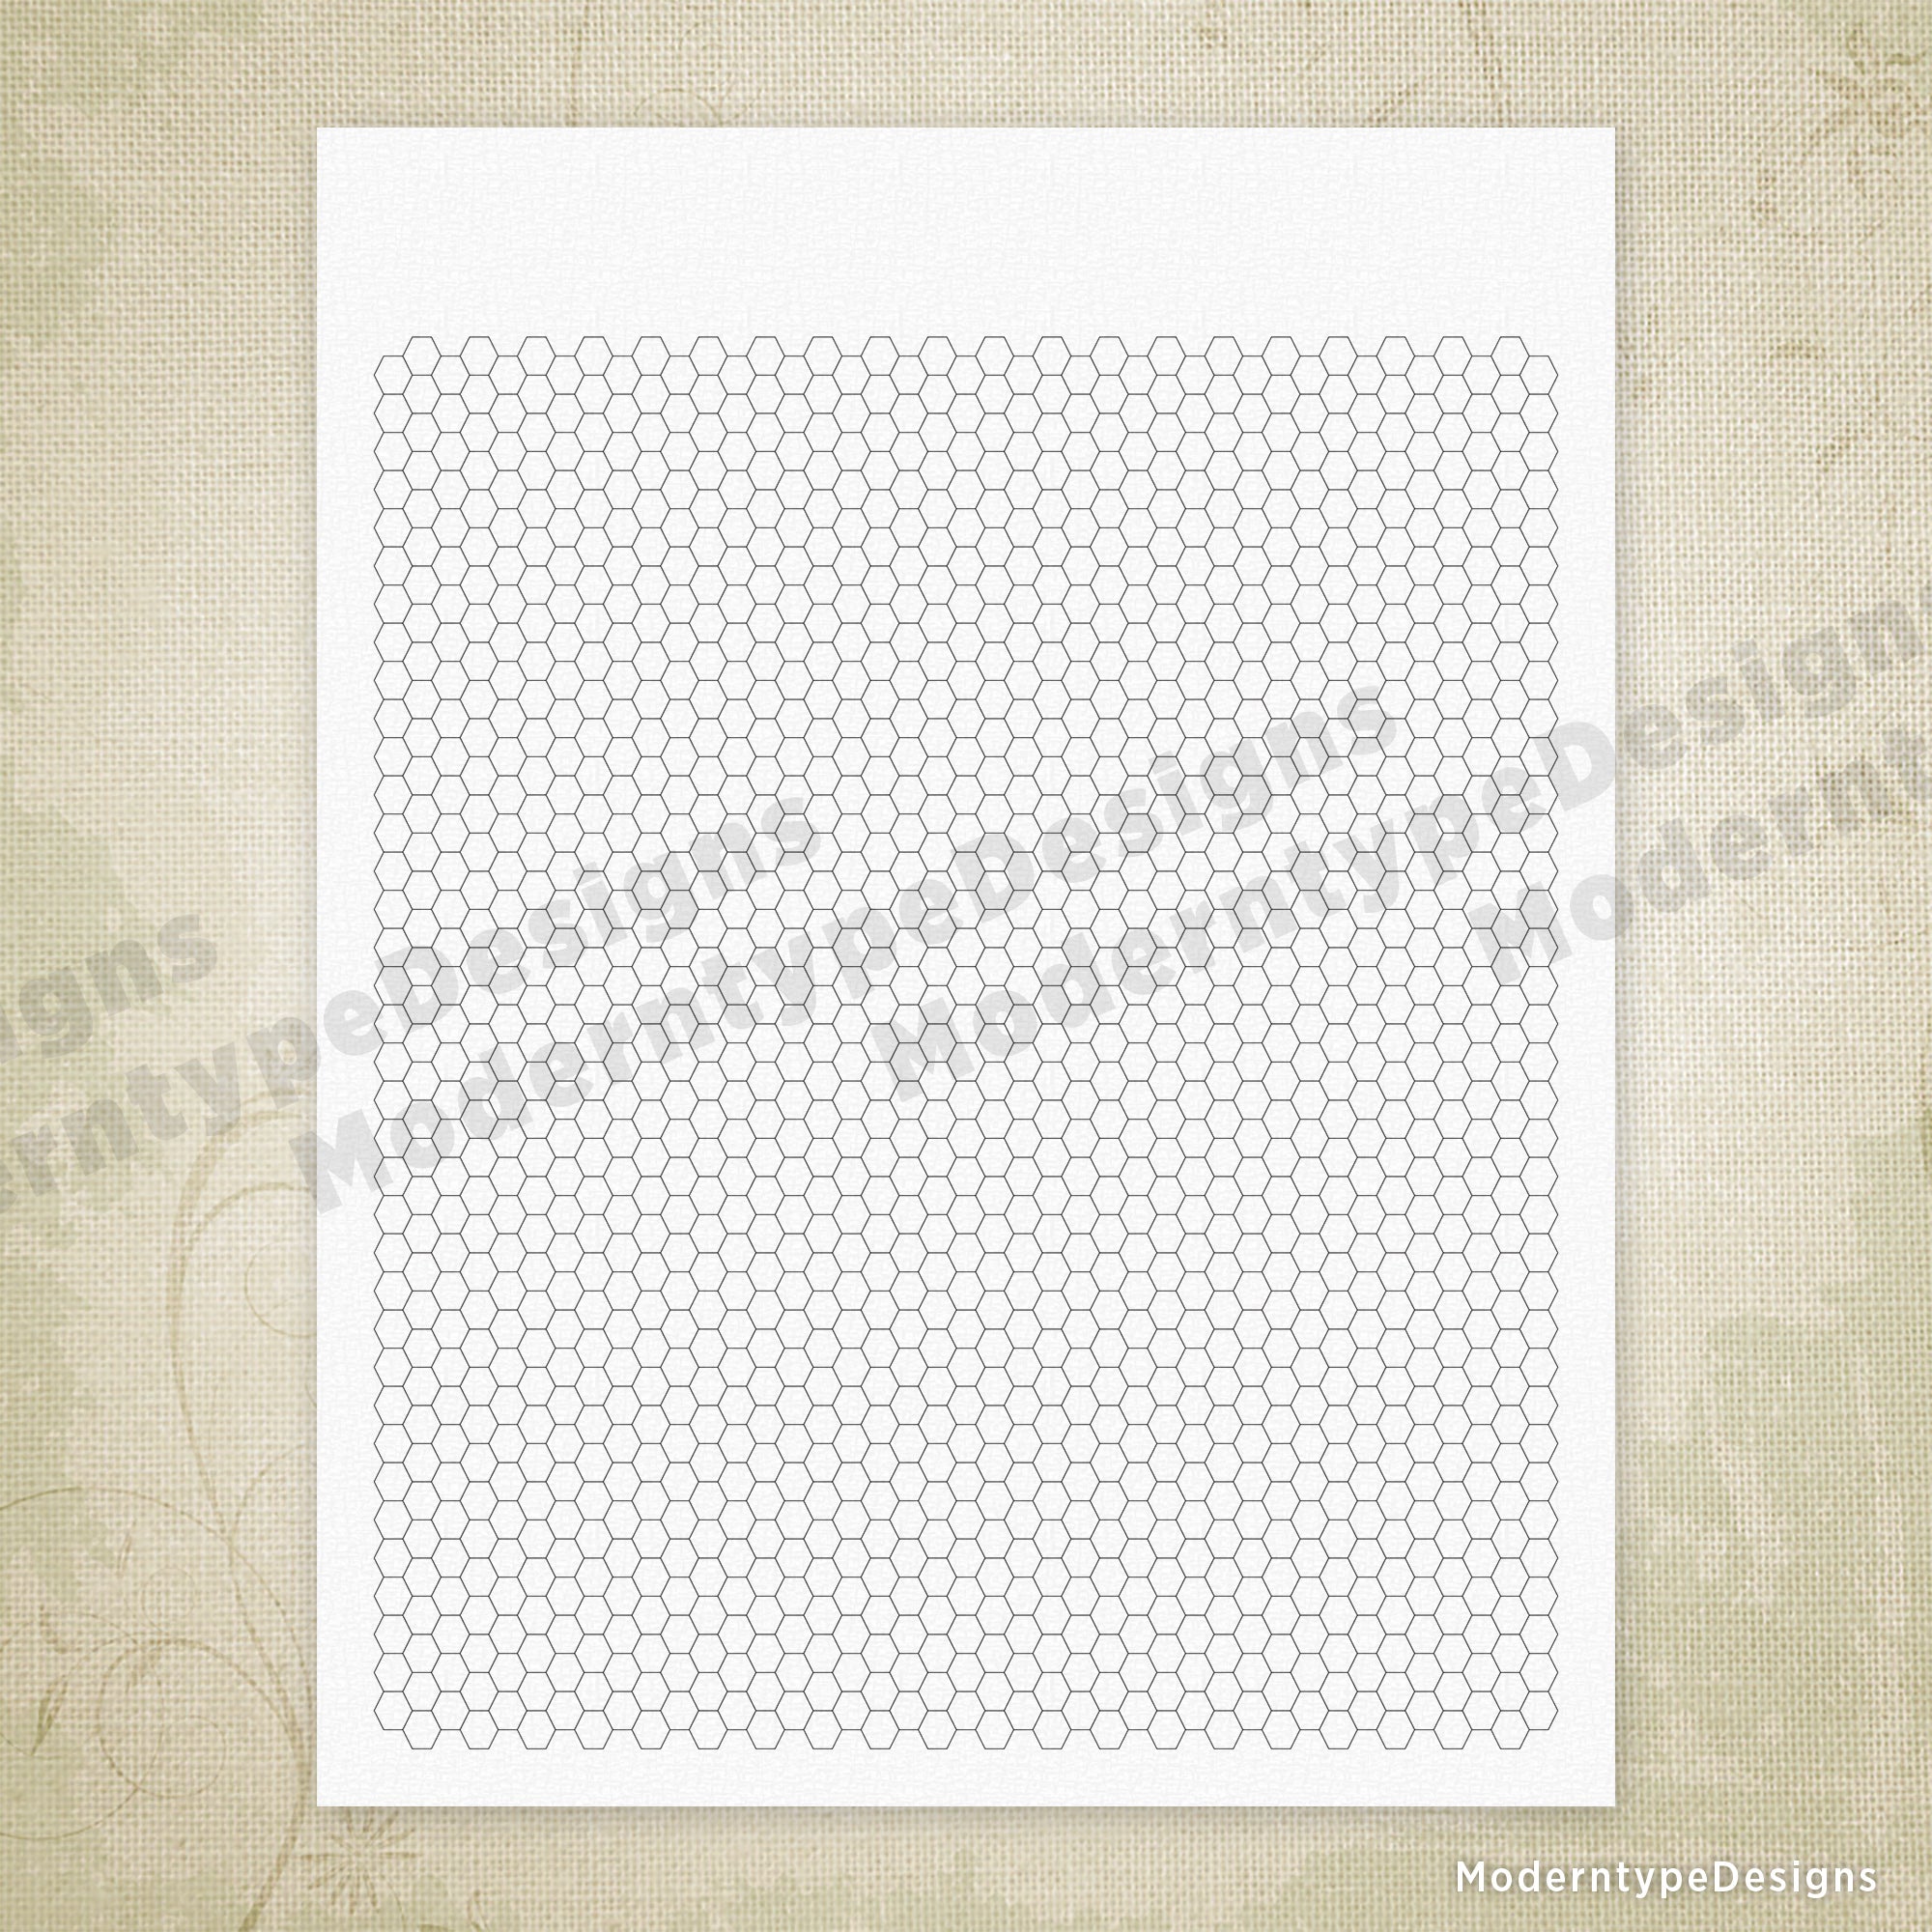 Hexagon Grid Digital Paper Printable